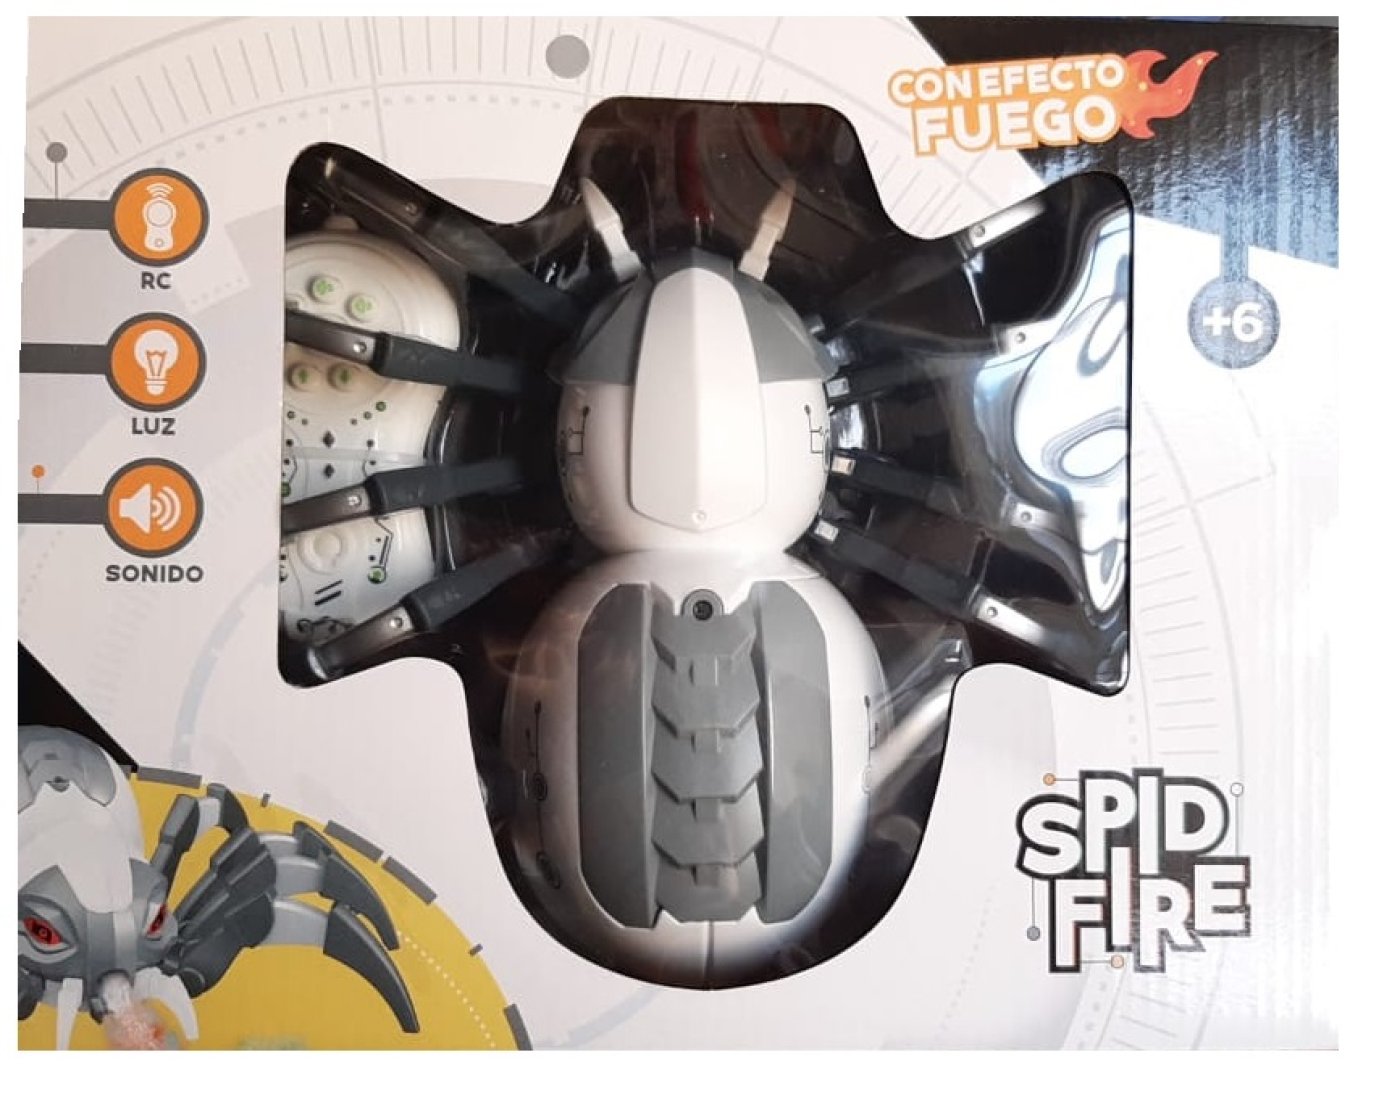 Araña Robot Spid Fire Luz Y Sonido Vapor A Control Spider